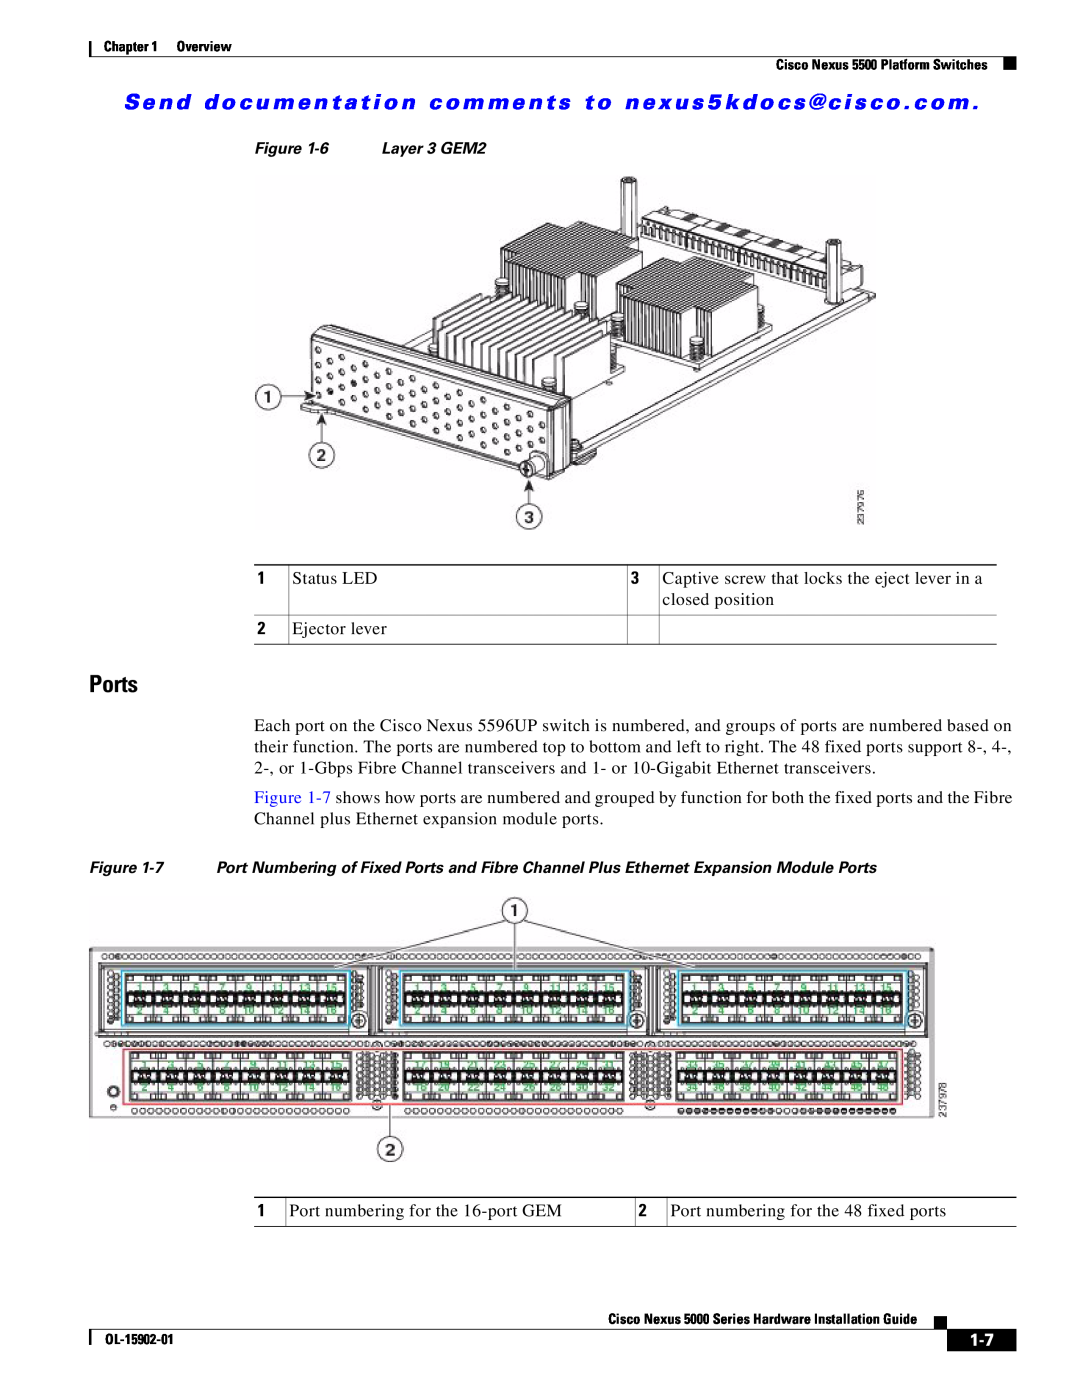 Cisco Systems 5000 manual Ports, Layer 3 GEM2 